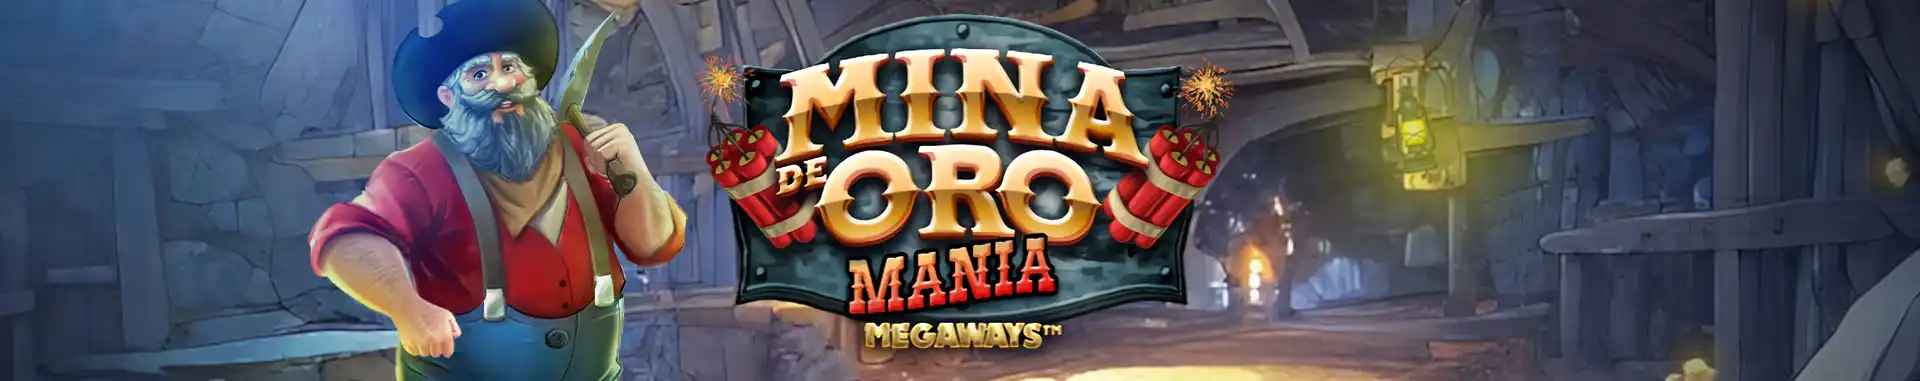 Tragaperras online Mina de oro mania Megaways